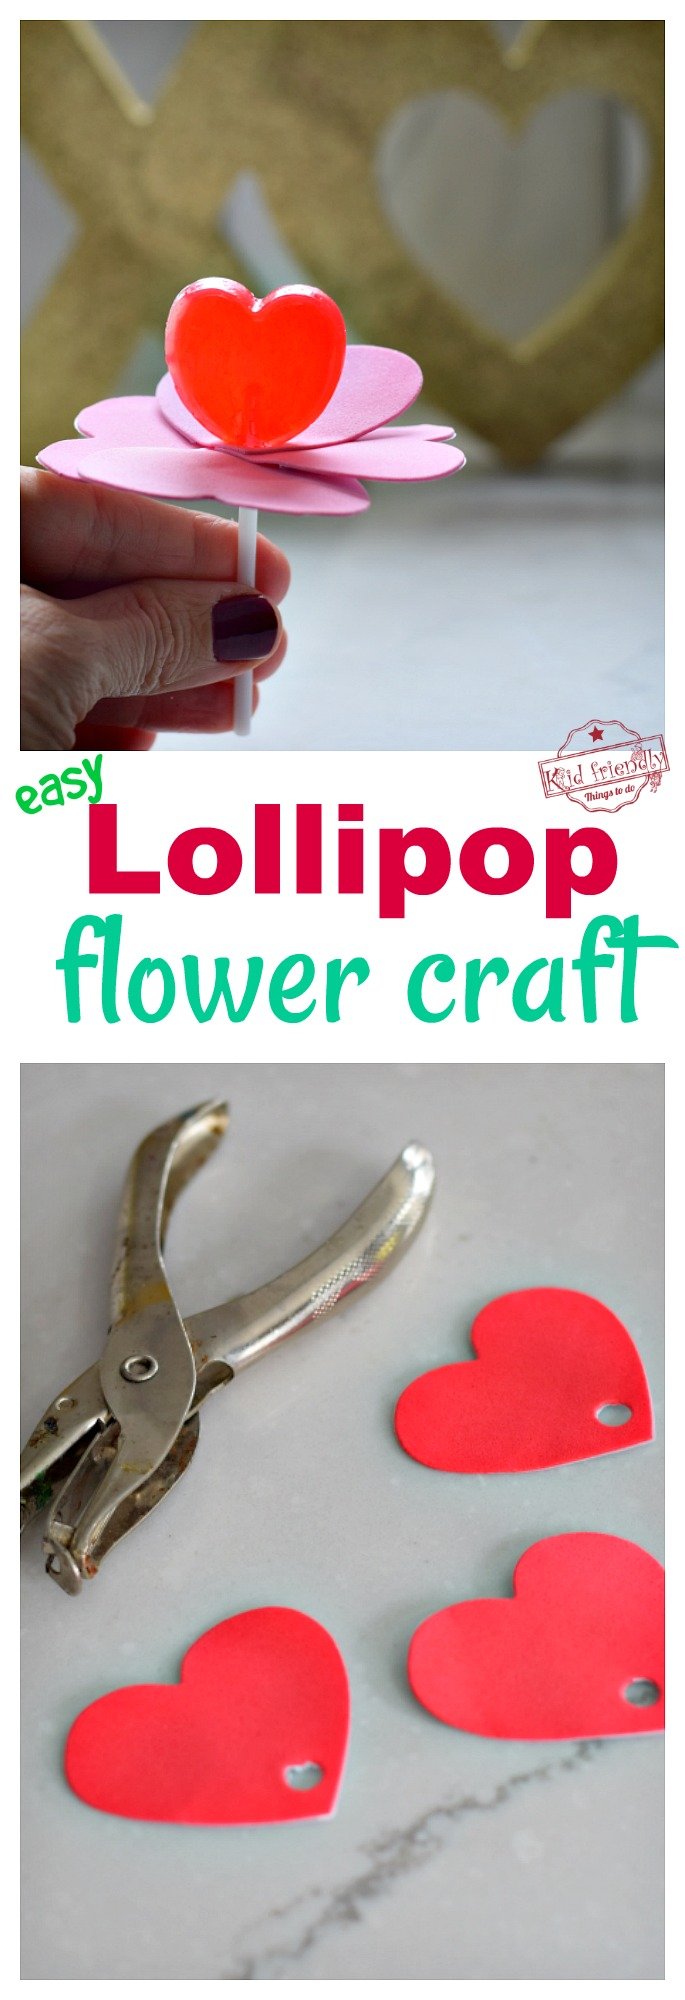 Lollipop Flower Craft for Kids to Make 